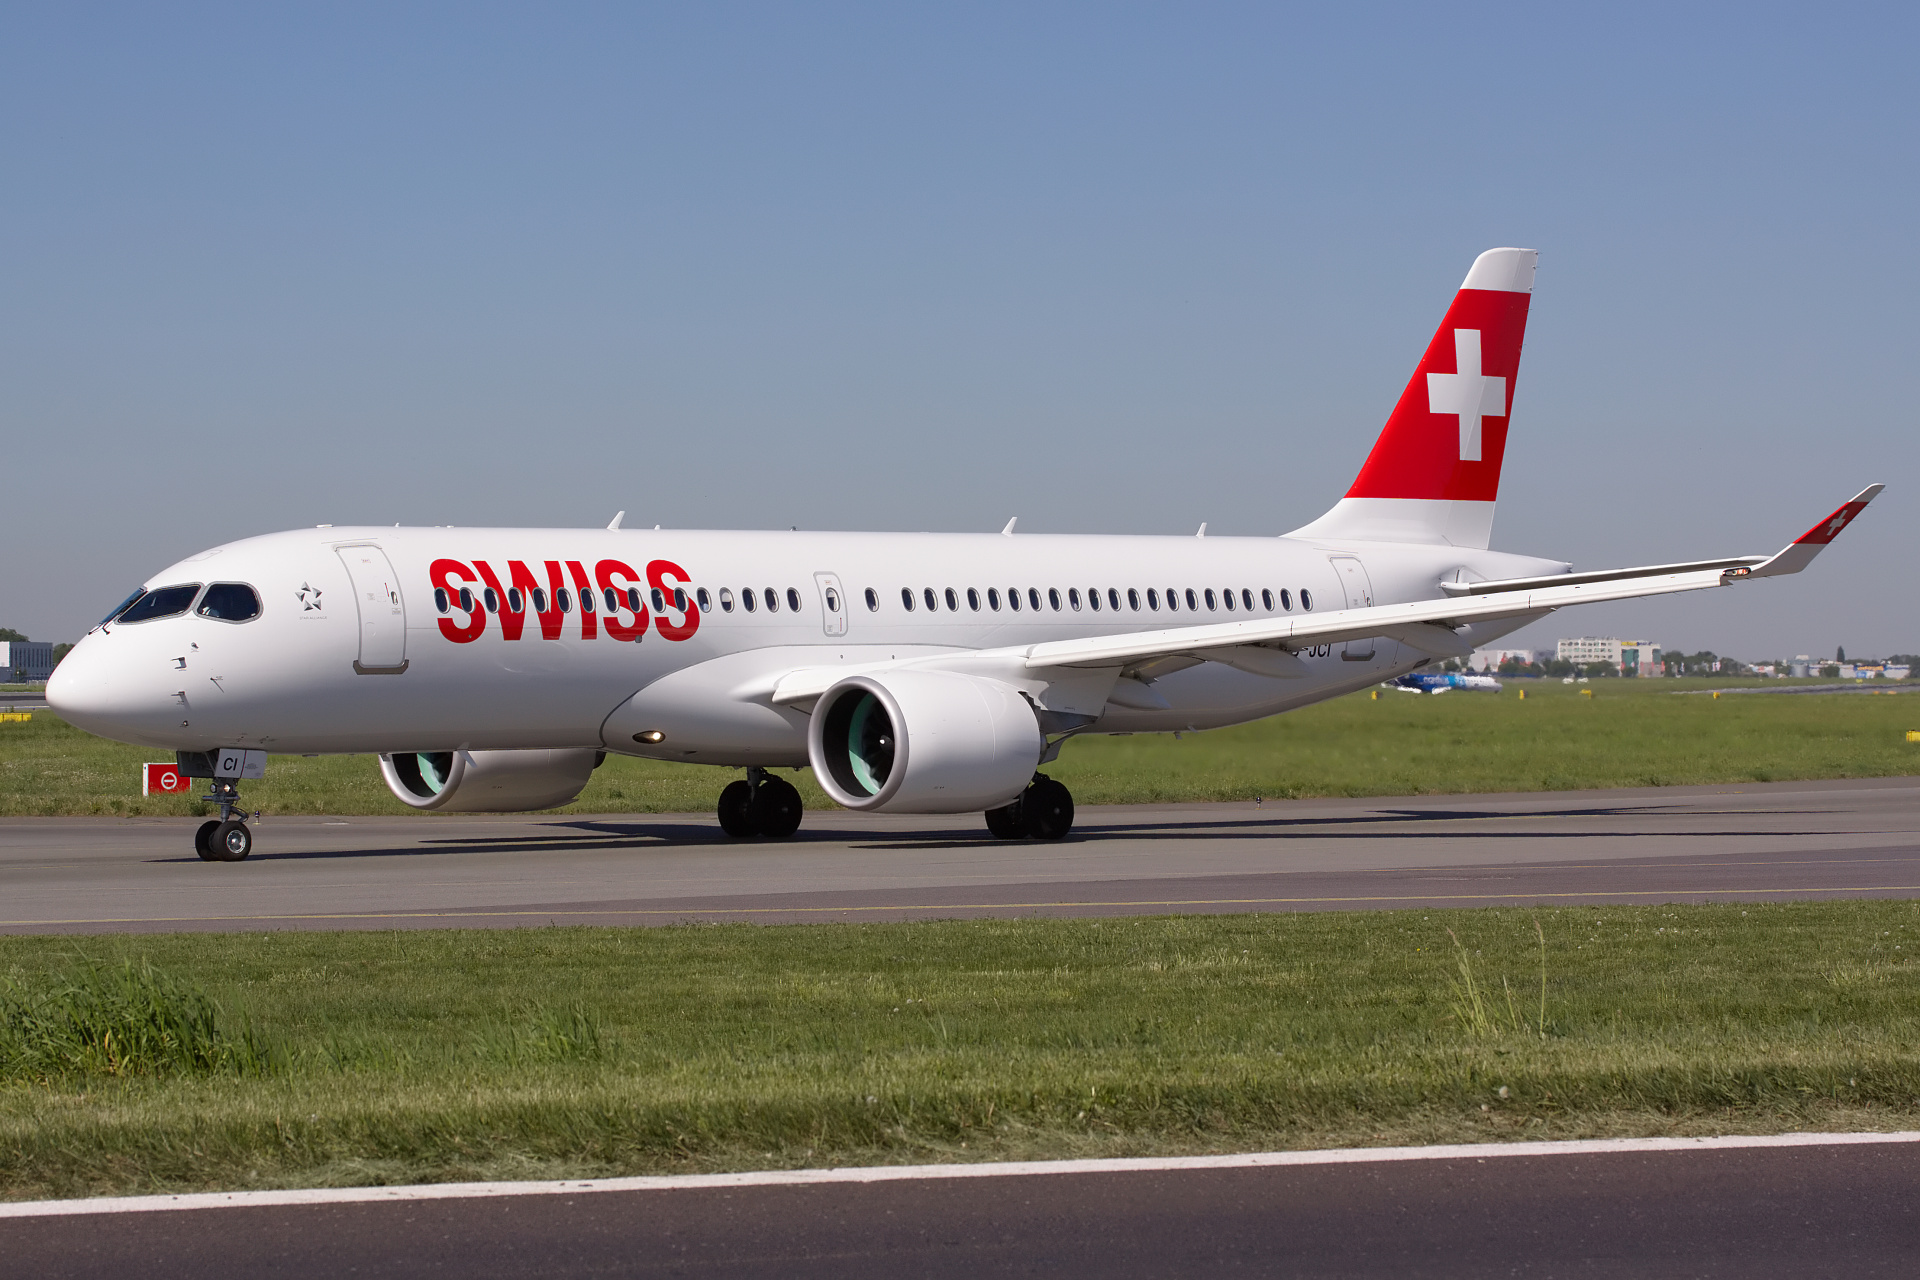 HB-JCI (Aircraft » EPWA Spotting » Airbus A220-300 » Swiss International Air Lines)